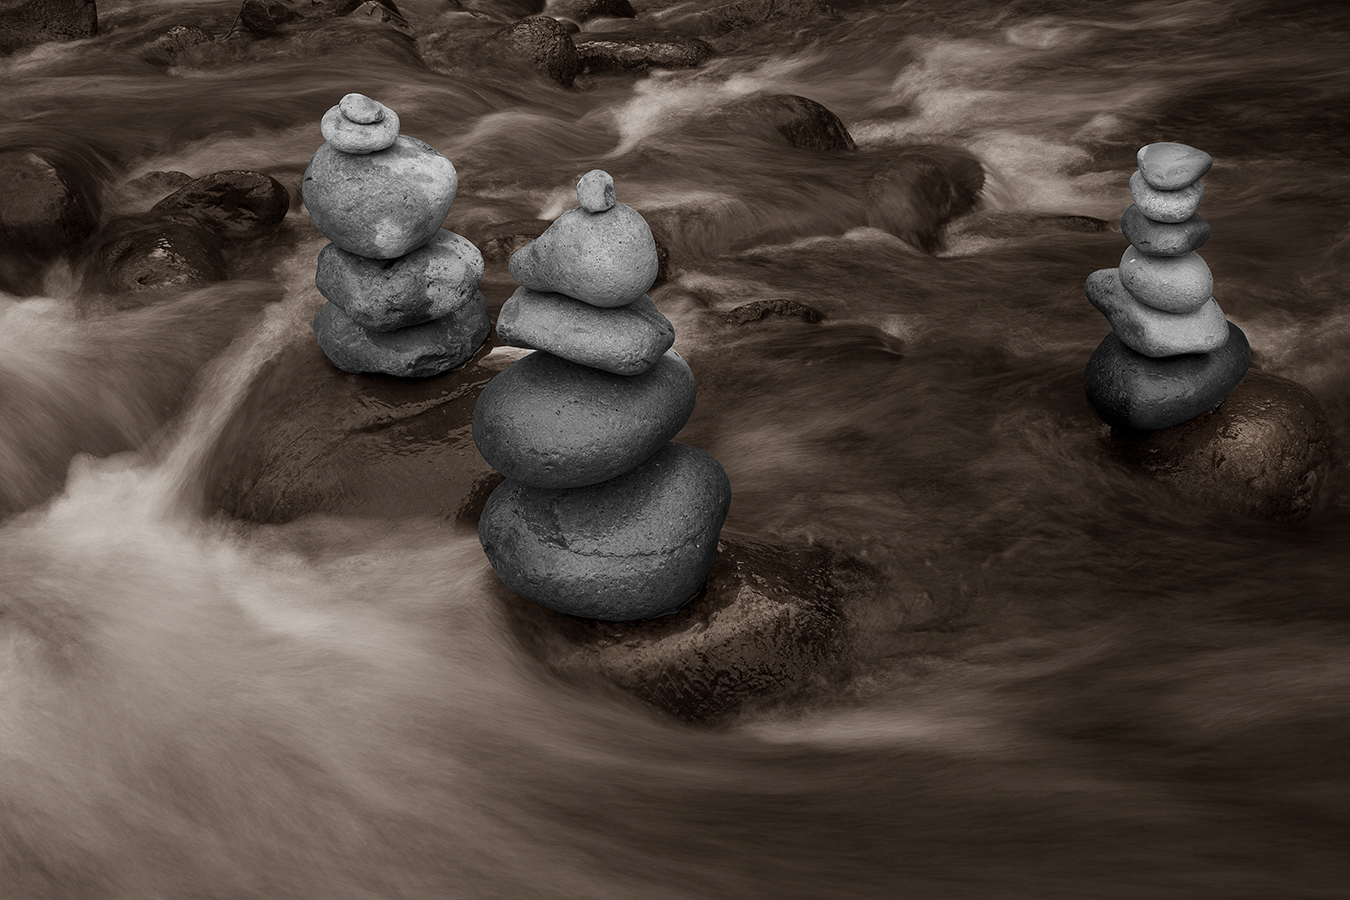 Stone sculptures in West Clear Creek, Arizona